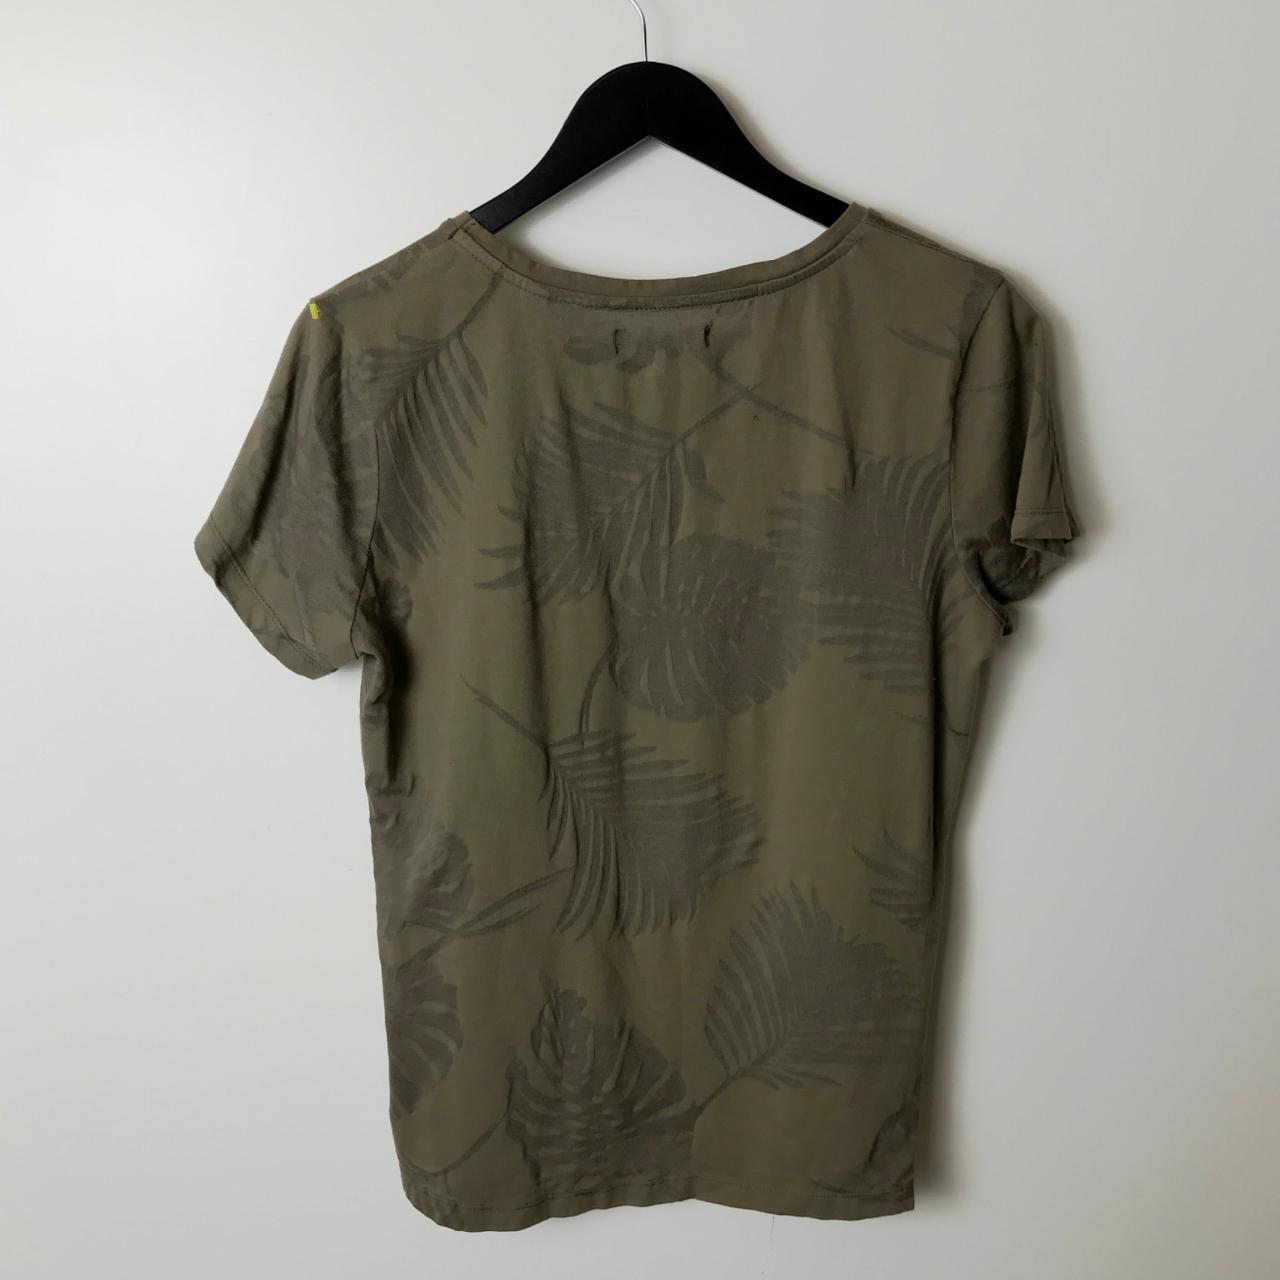 Product Image 4 - Superdry T Shirt Leaves Pocket